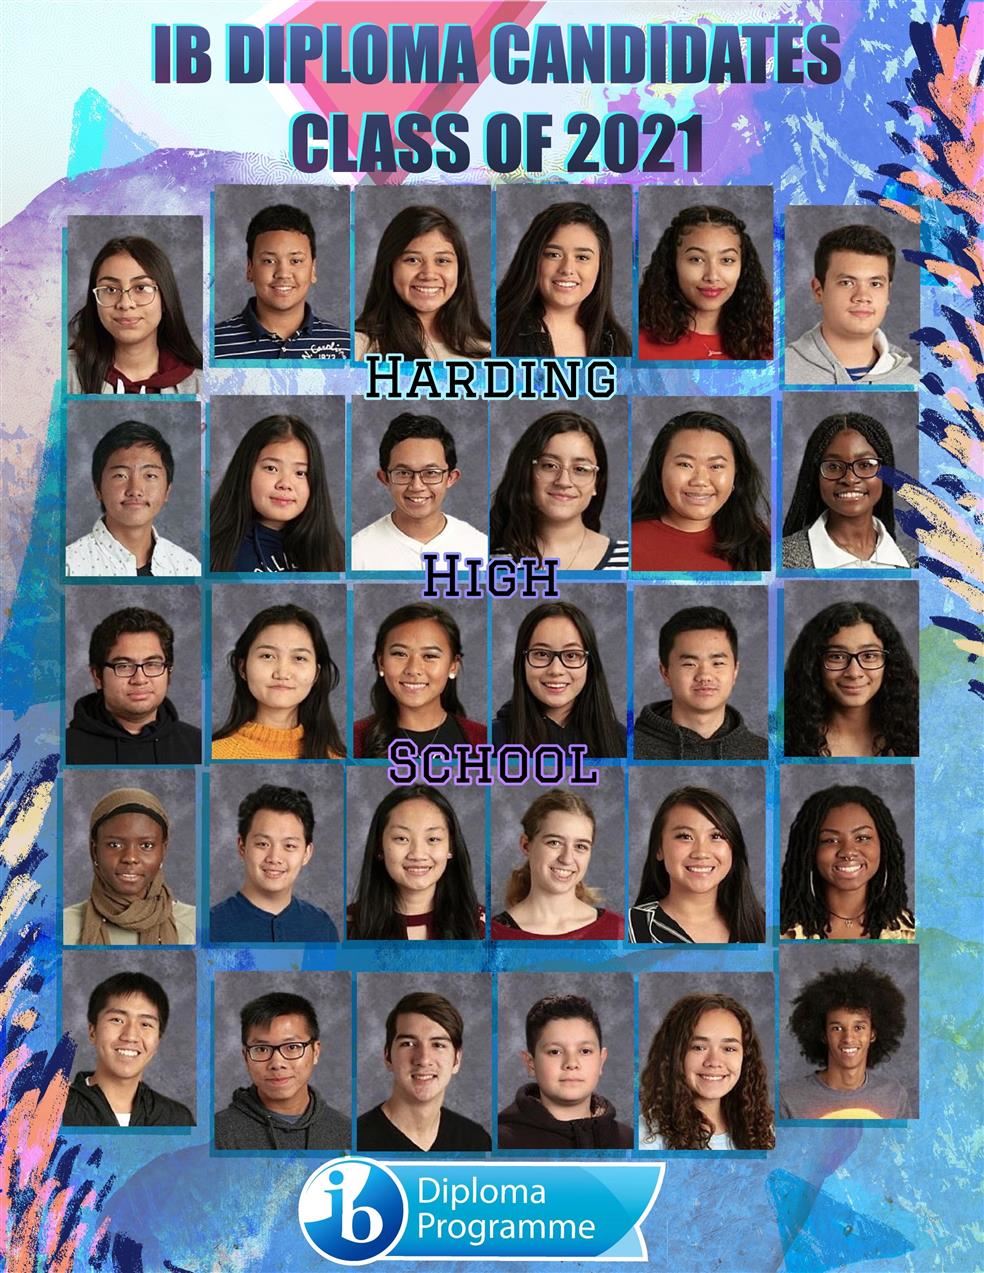 Harding High School 2021 IB Diploma Candidates